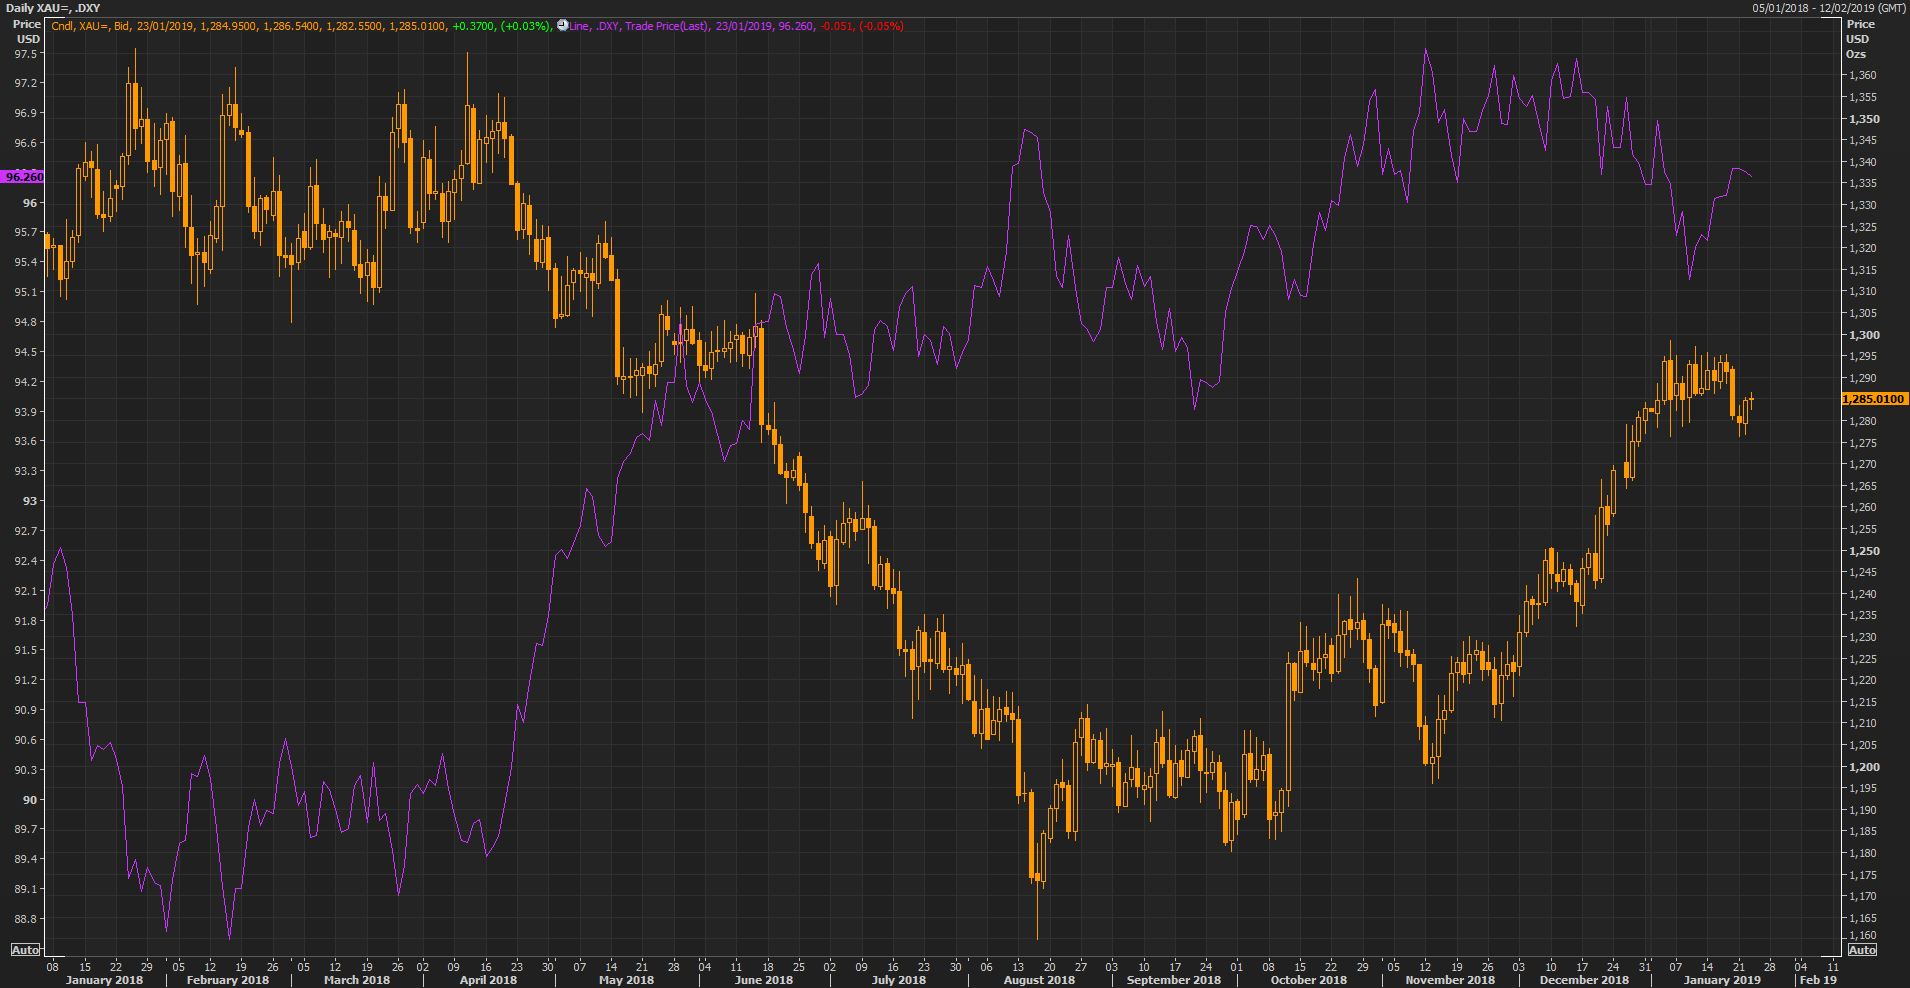 Gold (Orange) Vs USD (Purple) Daily Chart